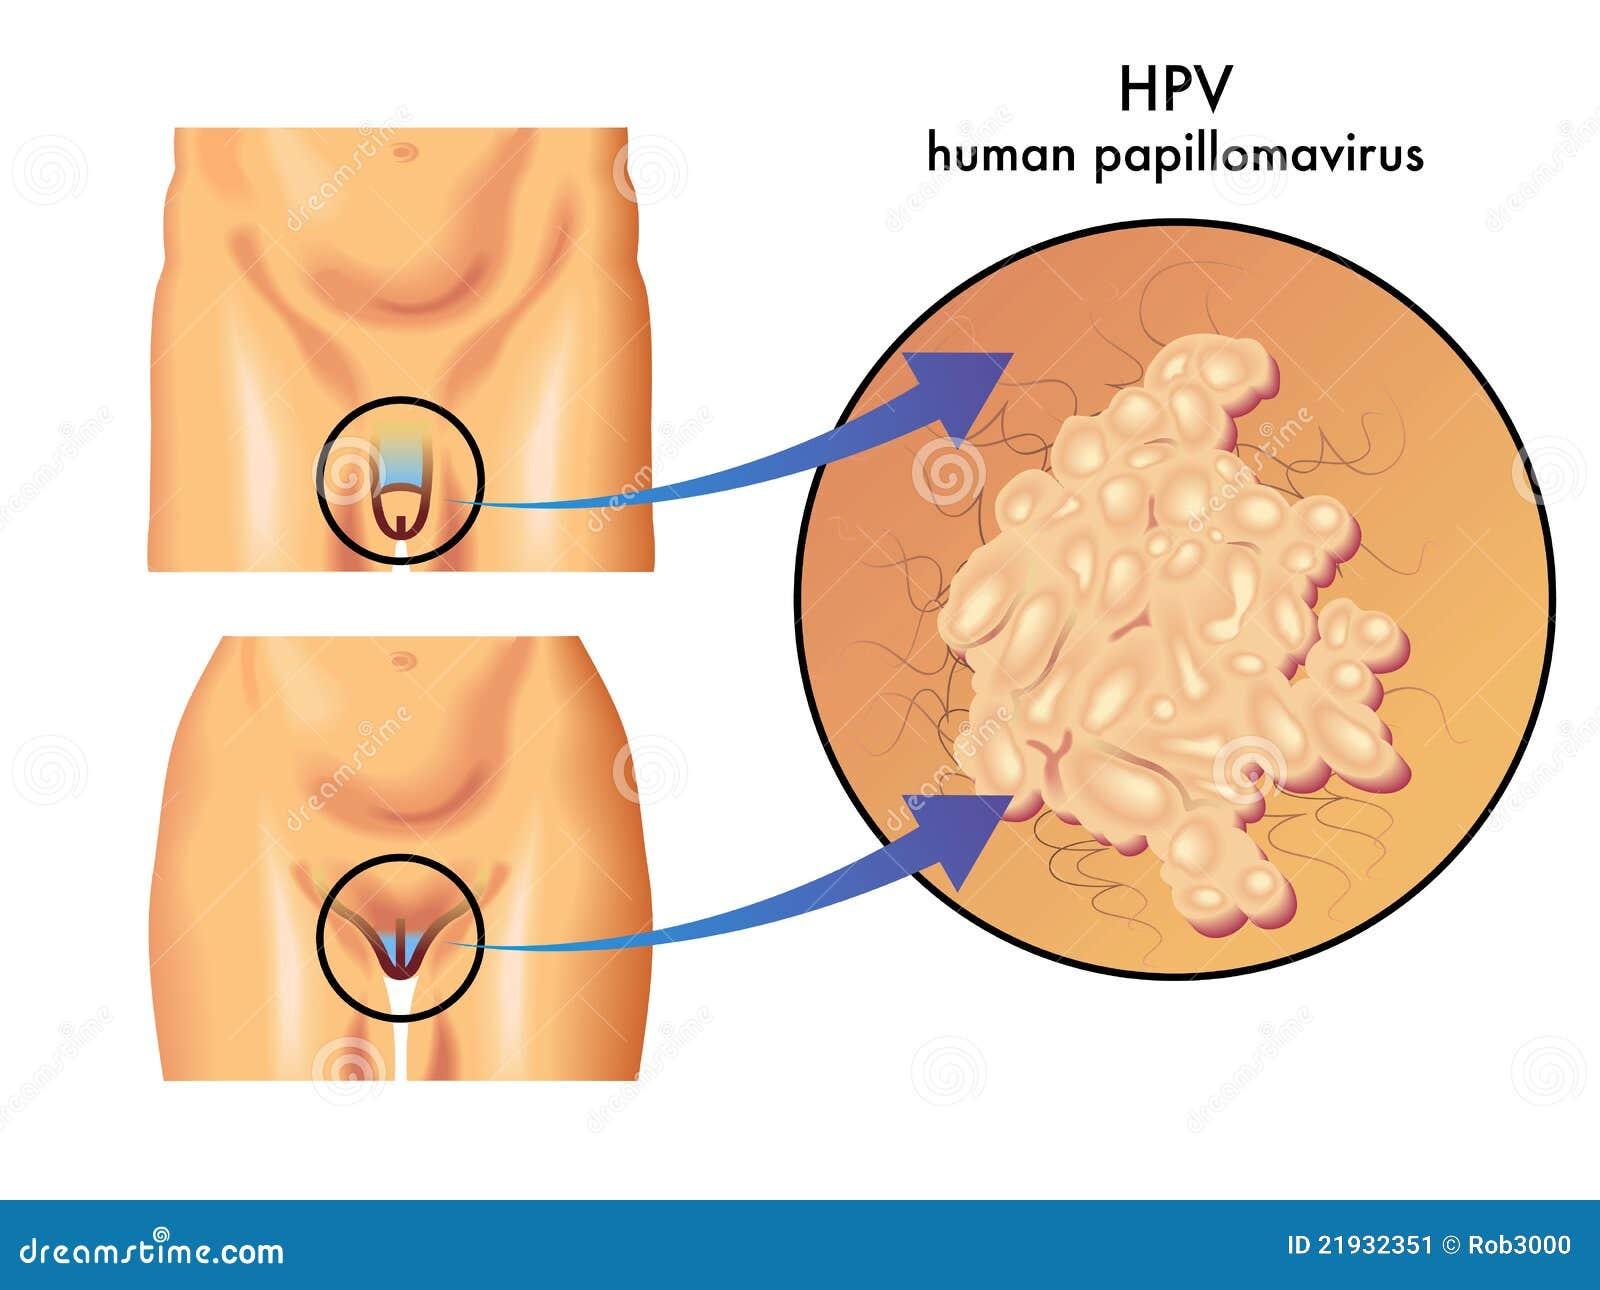 Genital Warts | HPV | Human Papillomavirus | MedlinePlus